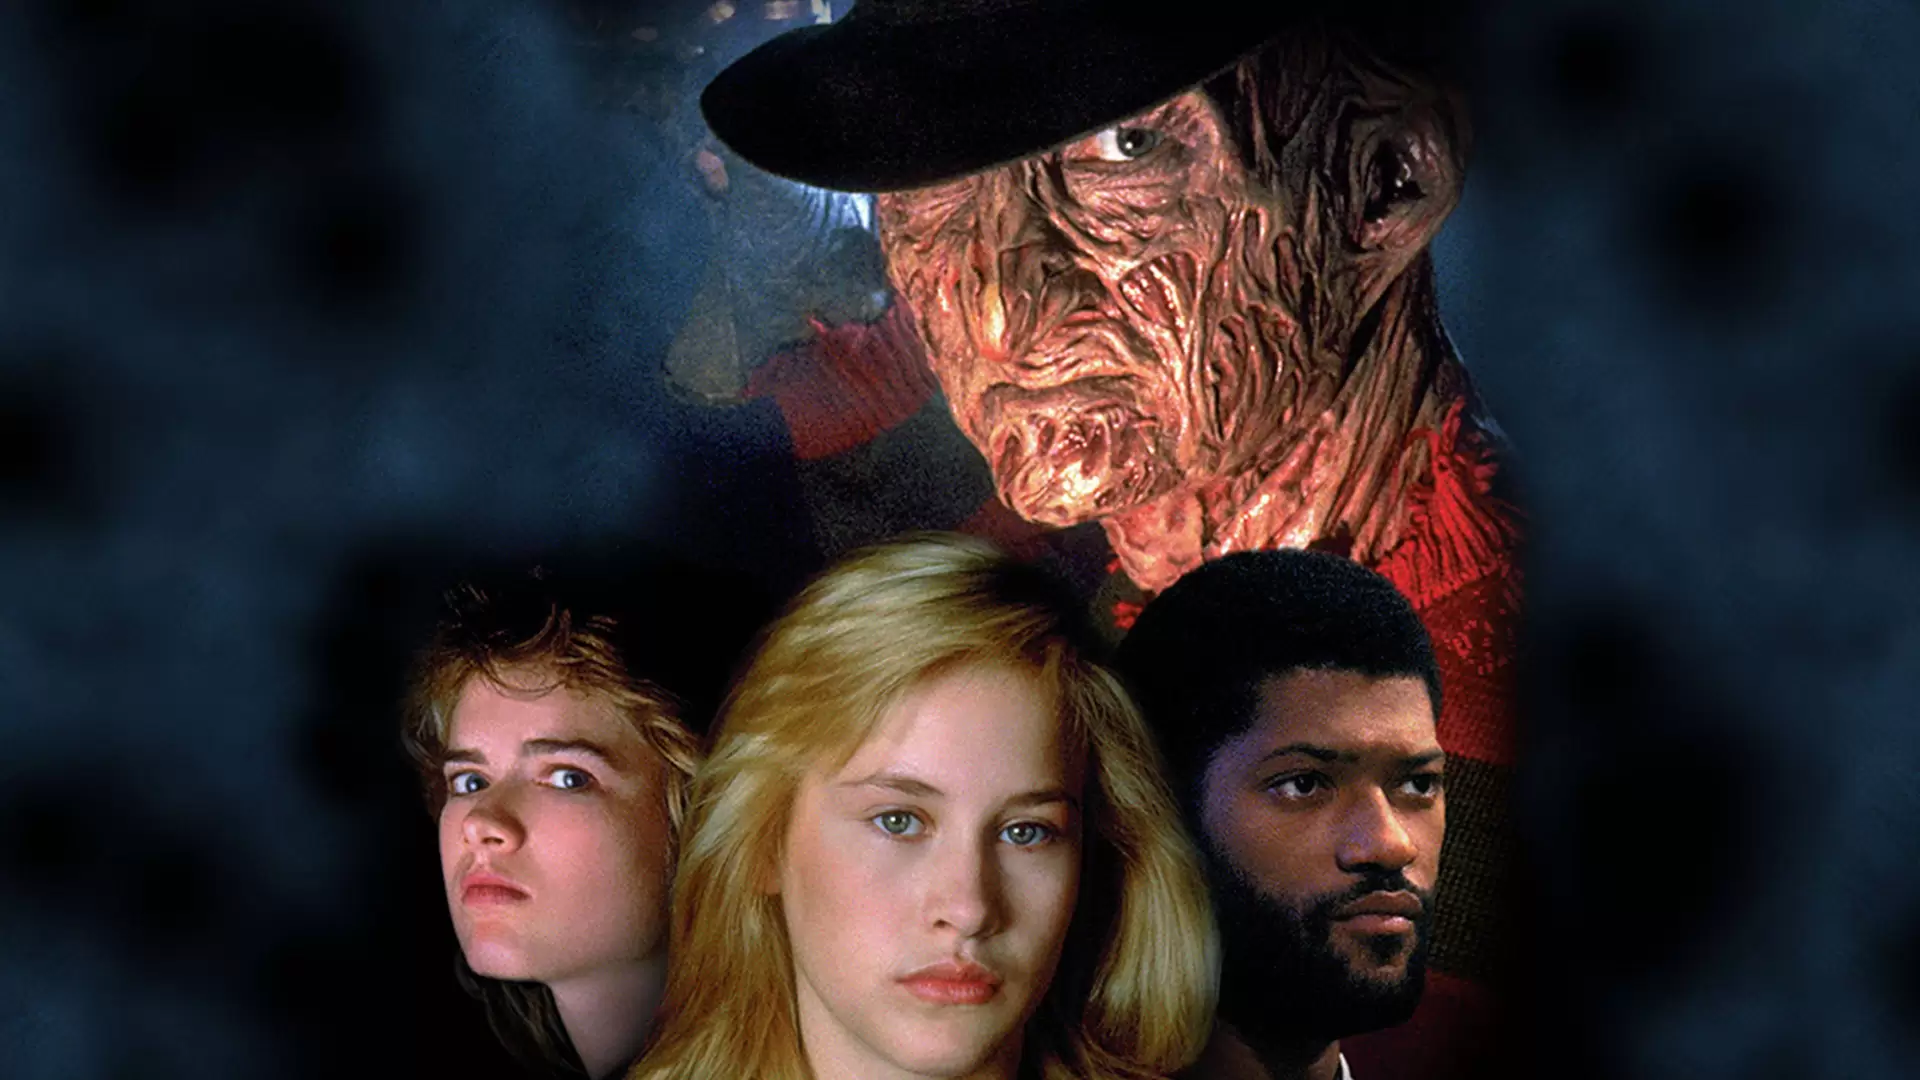 دانلود فیلم A Nightmare on Elm Street 3: Dream Warriors 1987 (کابوس در خیابان الم ۳: جنگجویان رؤیا) با زیرنویس فارسی و تماشای آنلاین